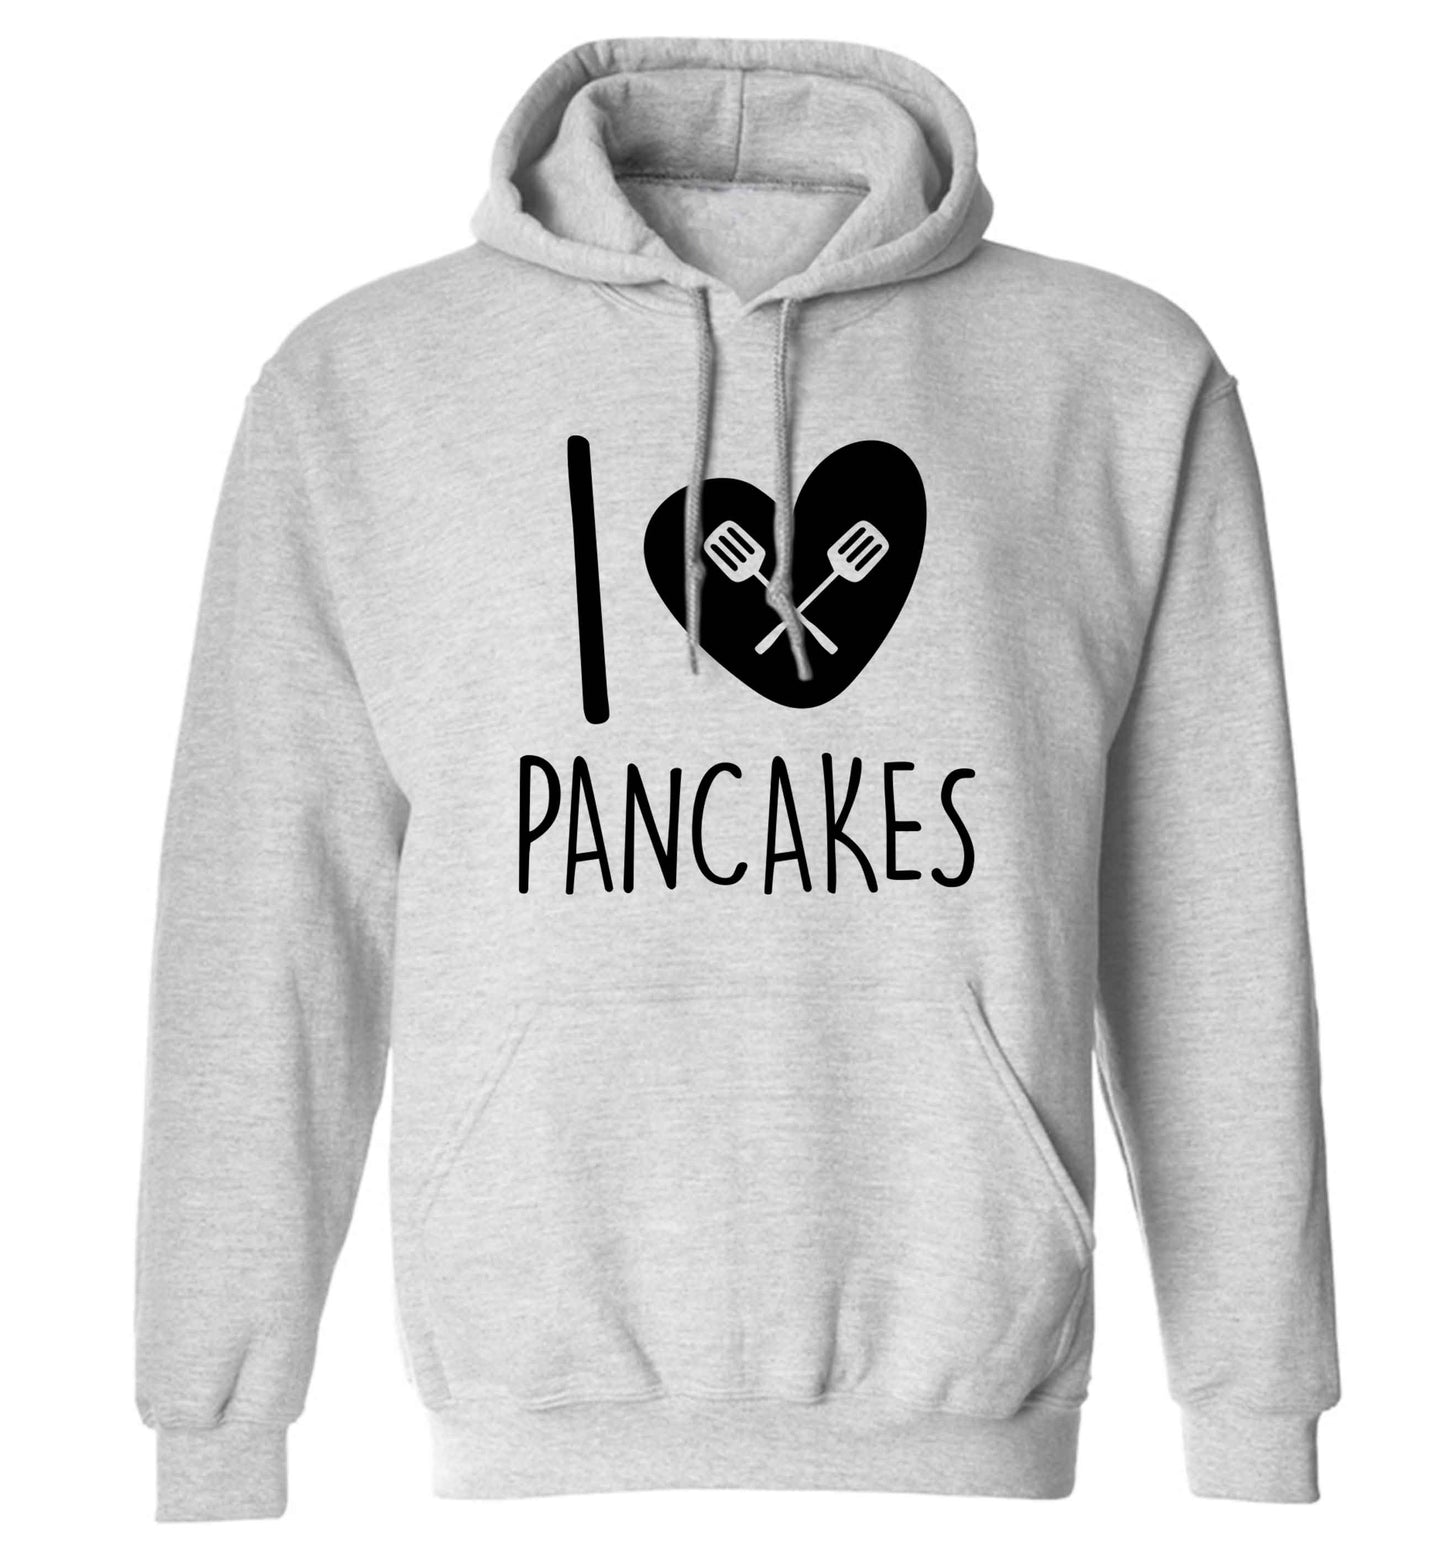 I love pancakes adults unisex grey hoodie 2XL